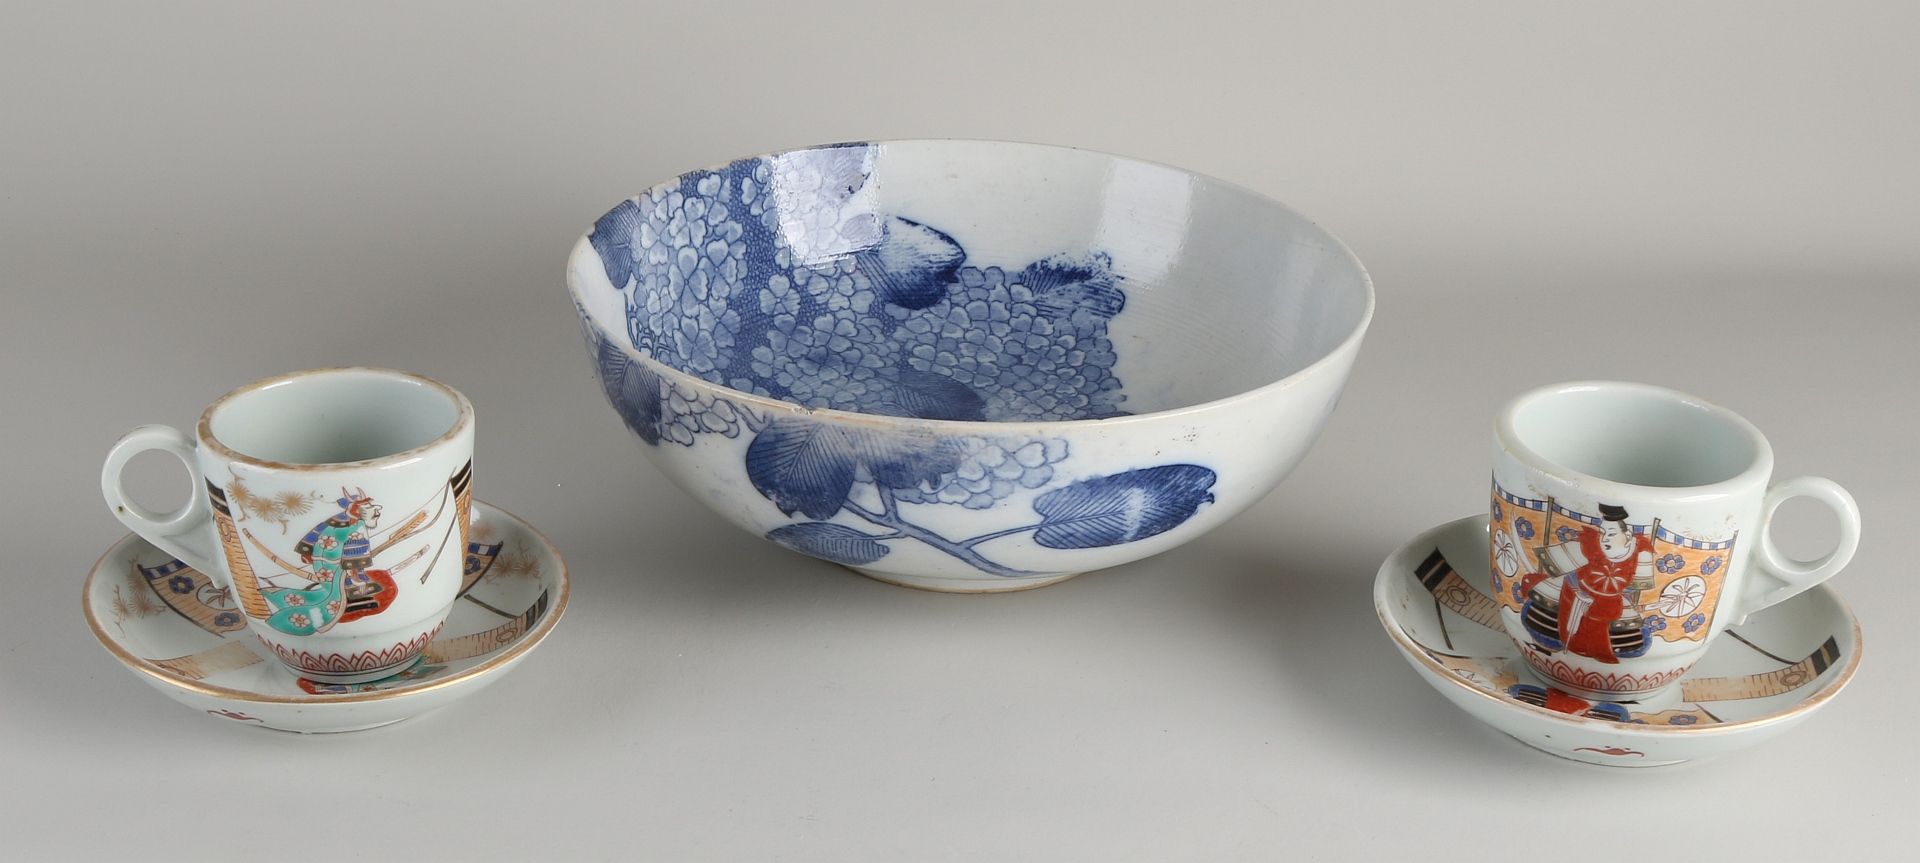 5x Japanese porcelain, 1900